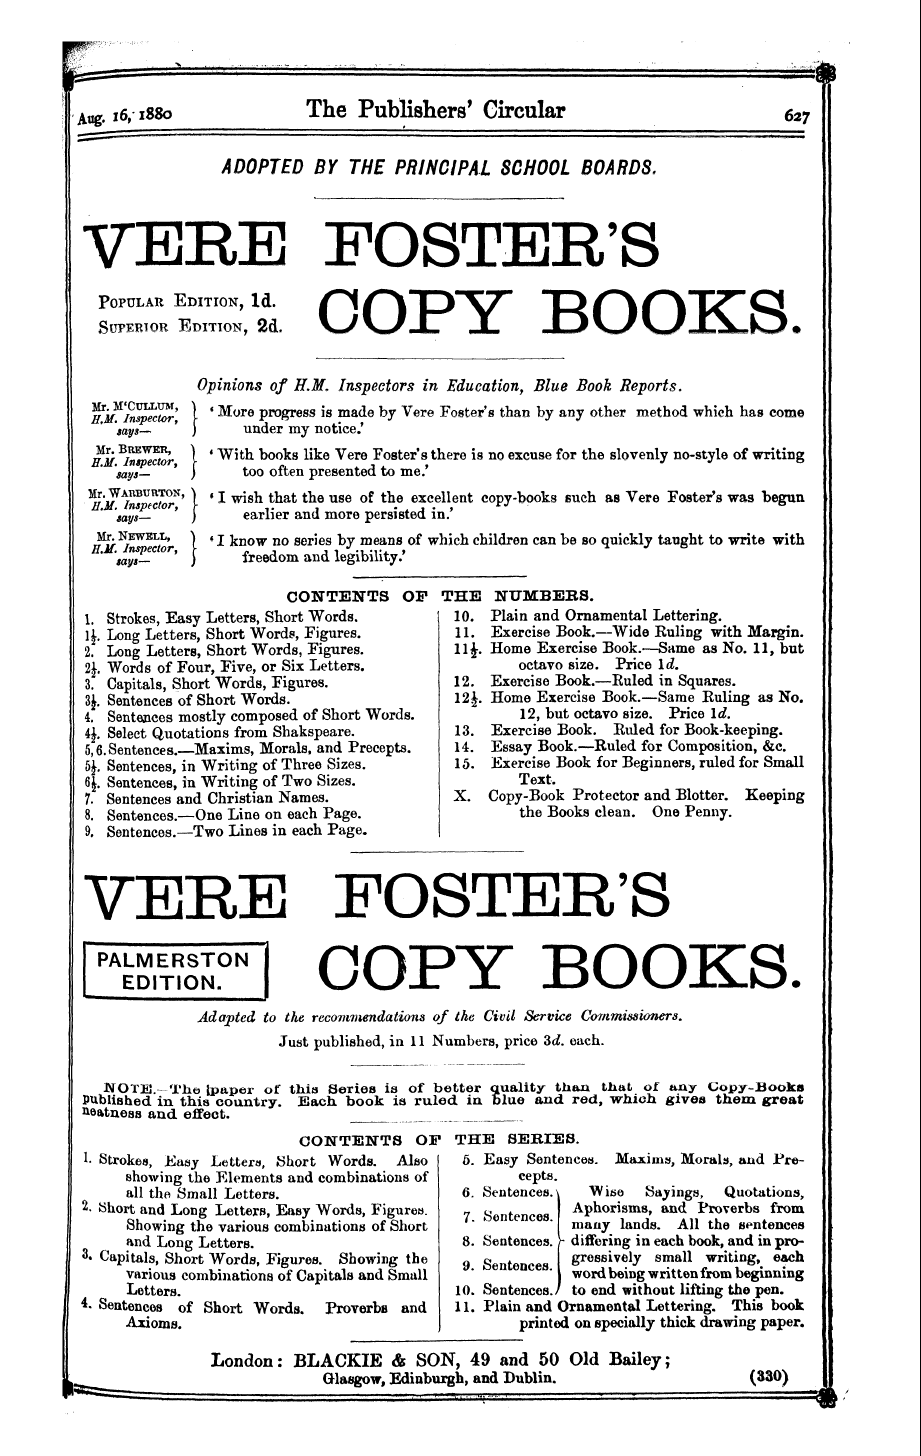 Publishers’ Circular (1880-1890): jS F Y, 1st edition: 31